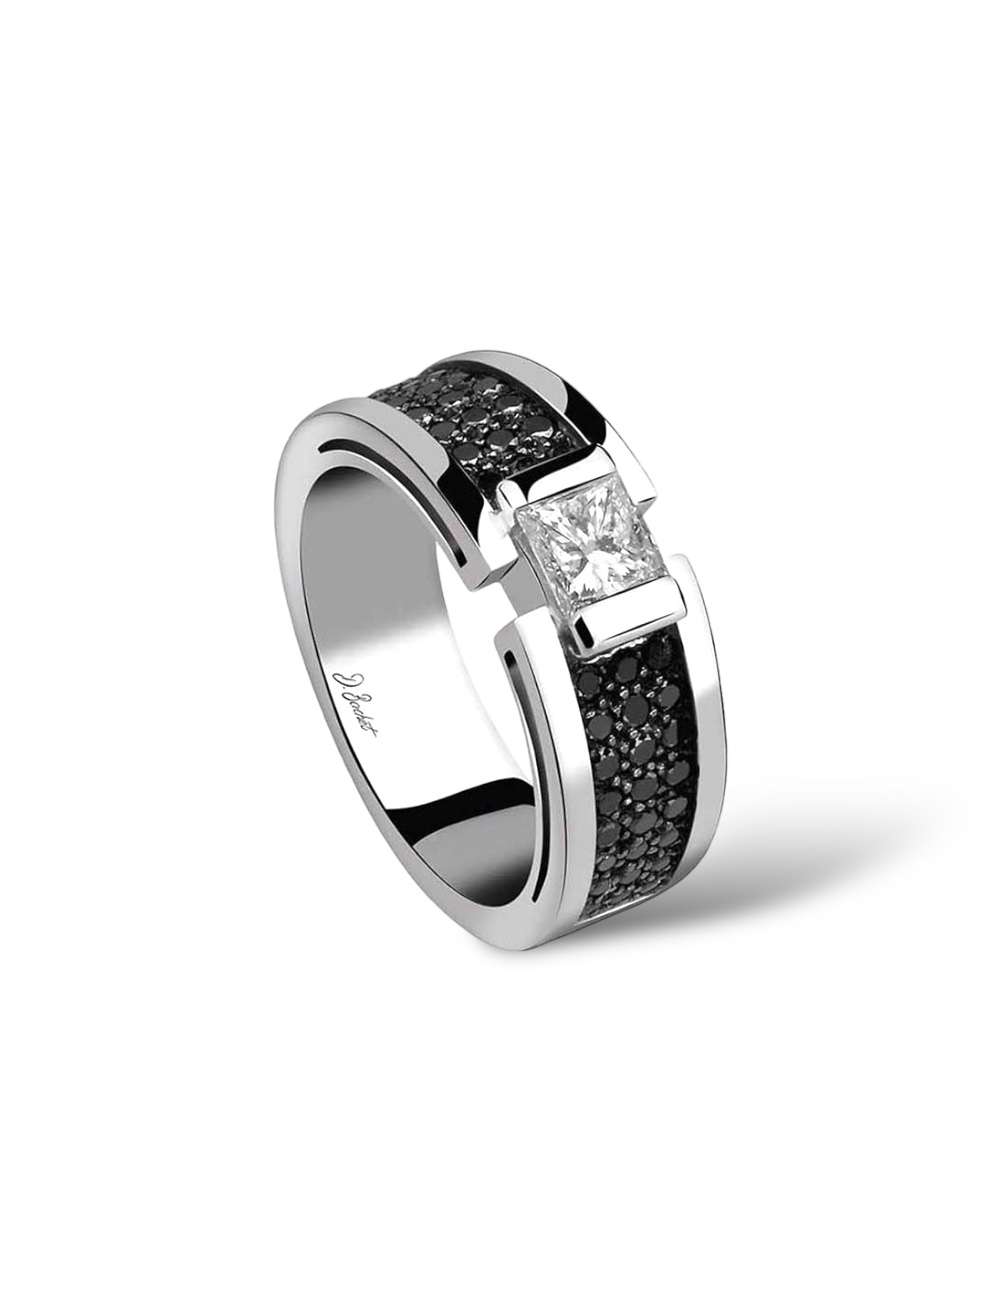 Luxury solitaire with 0.50ct princess-cut diamond, platinum, and black diamonds for modern elegance.